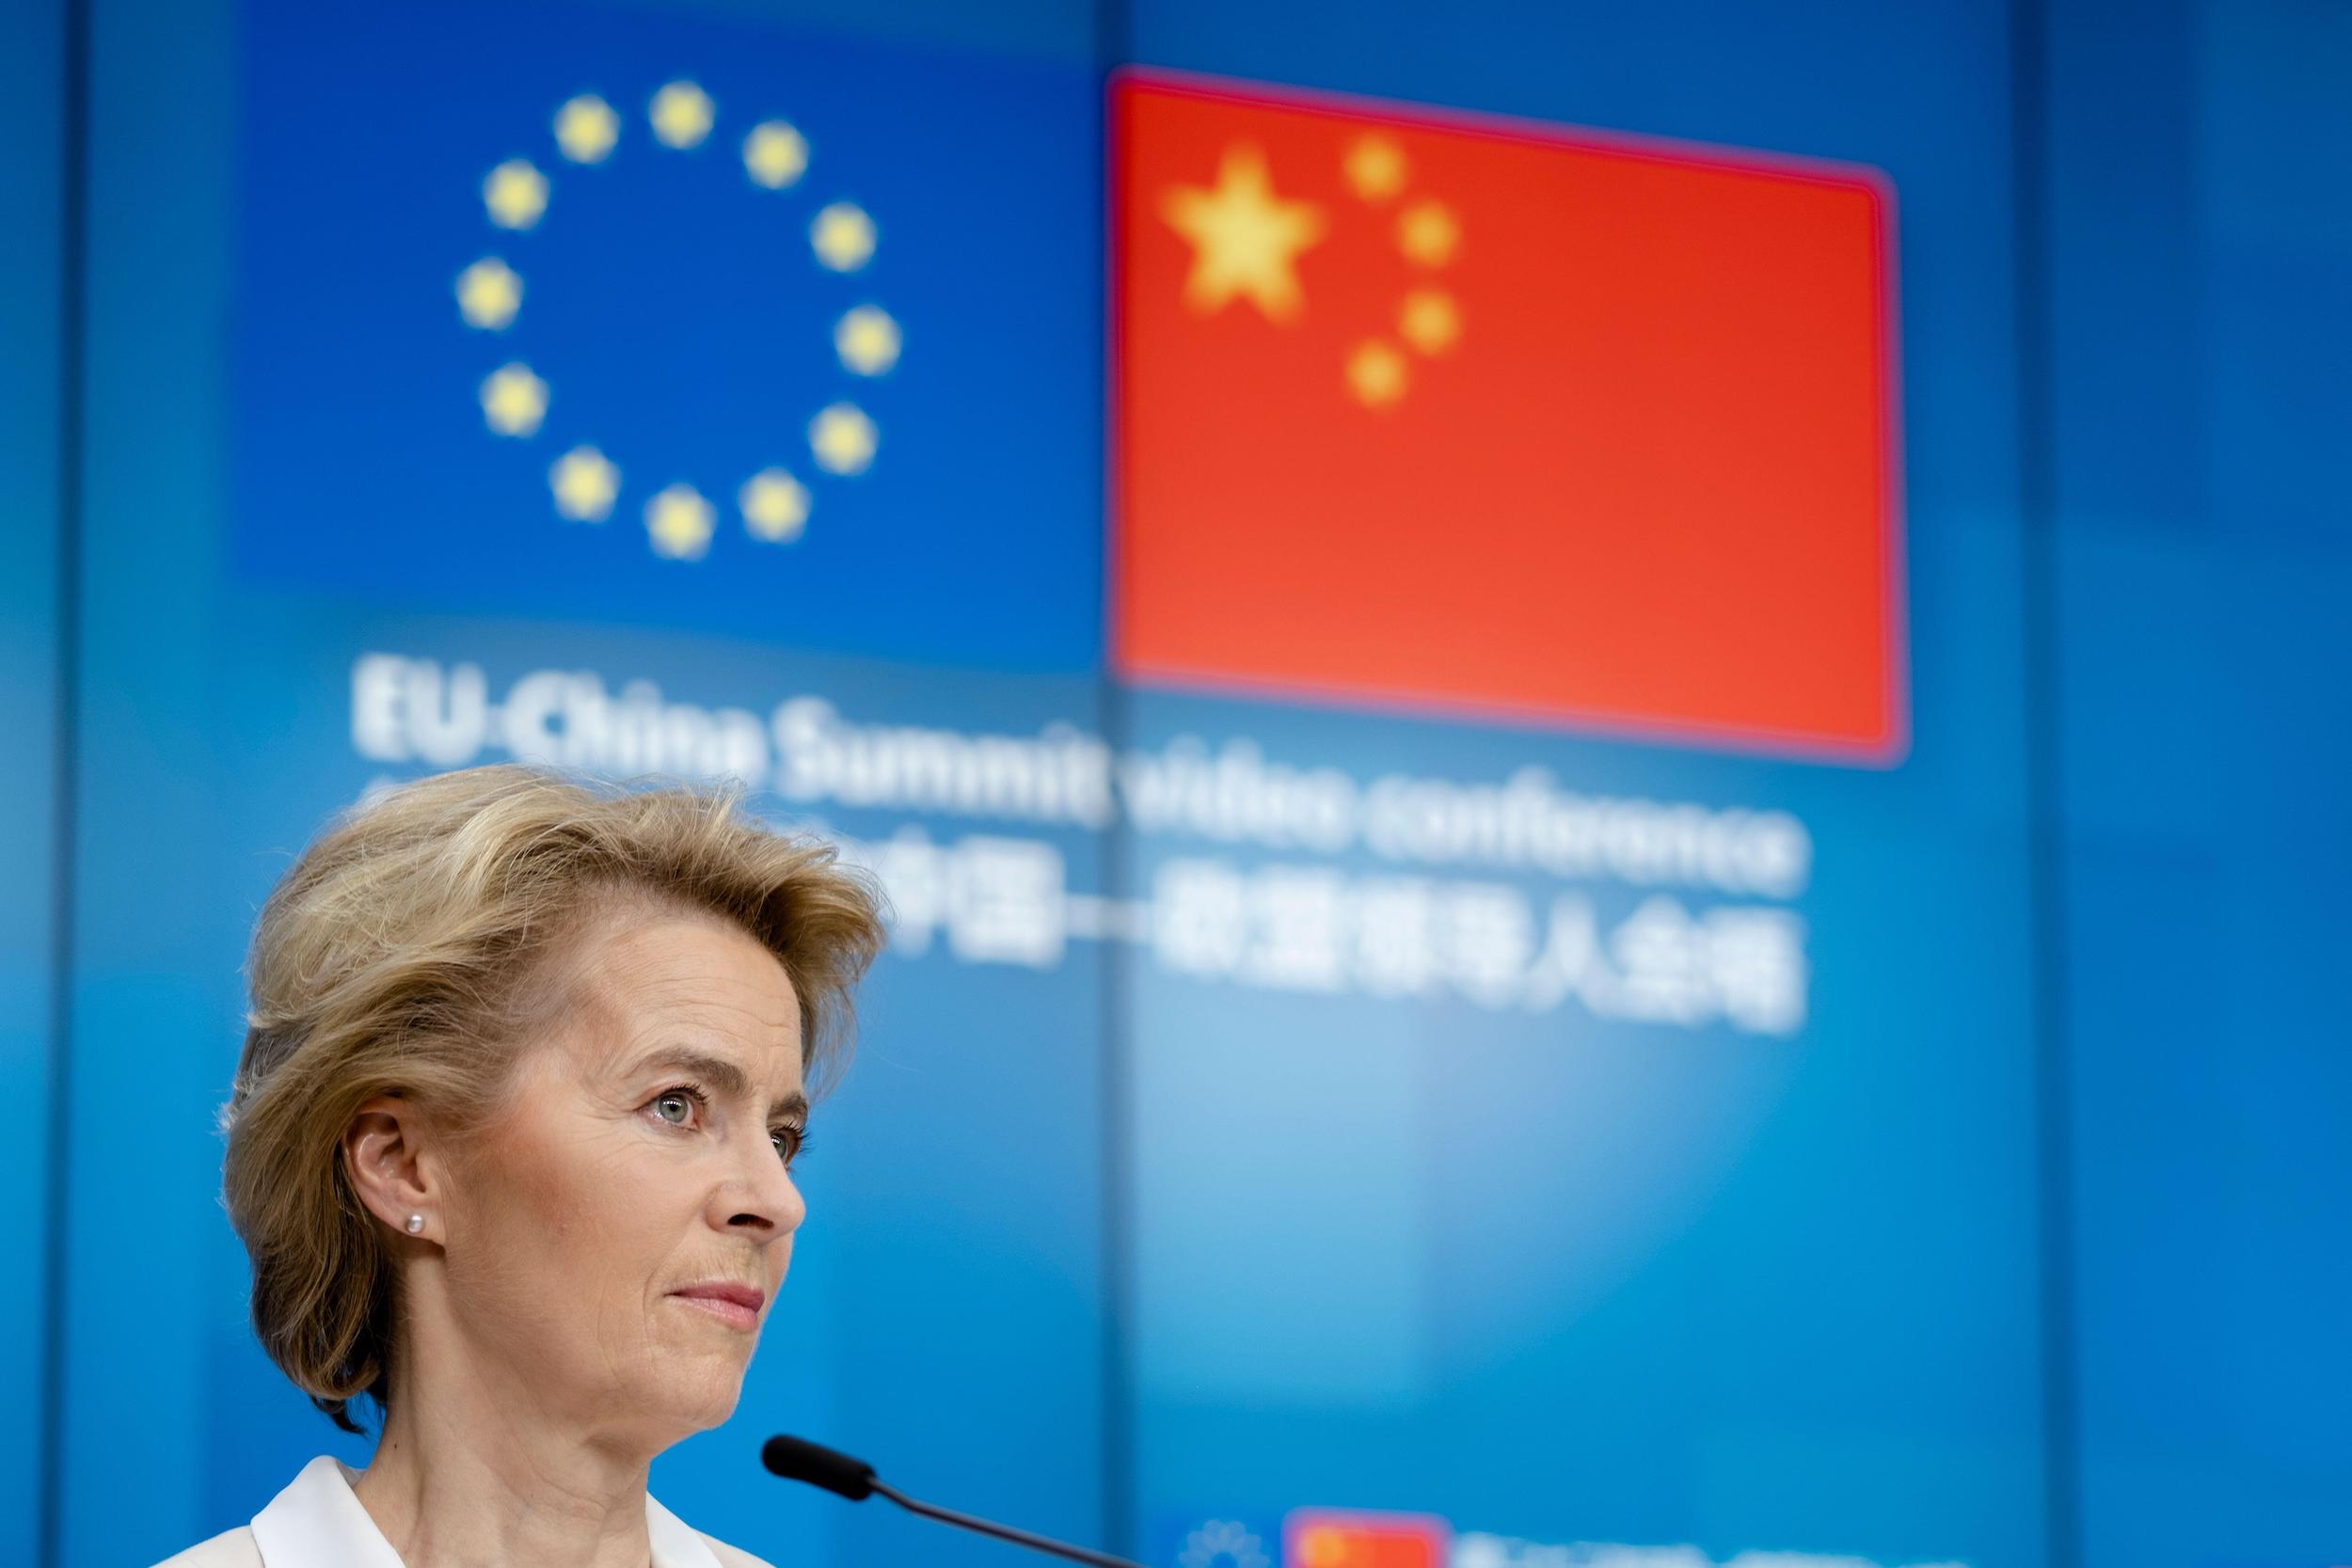 online EU-China summit June 2020